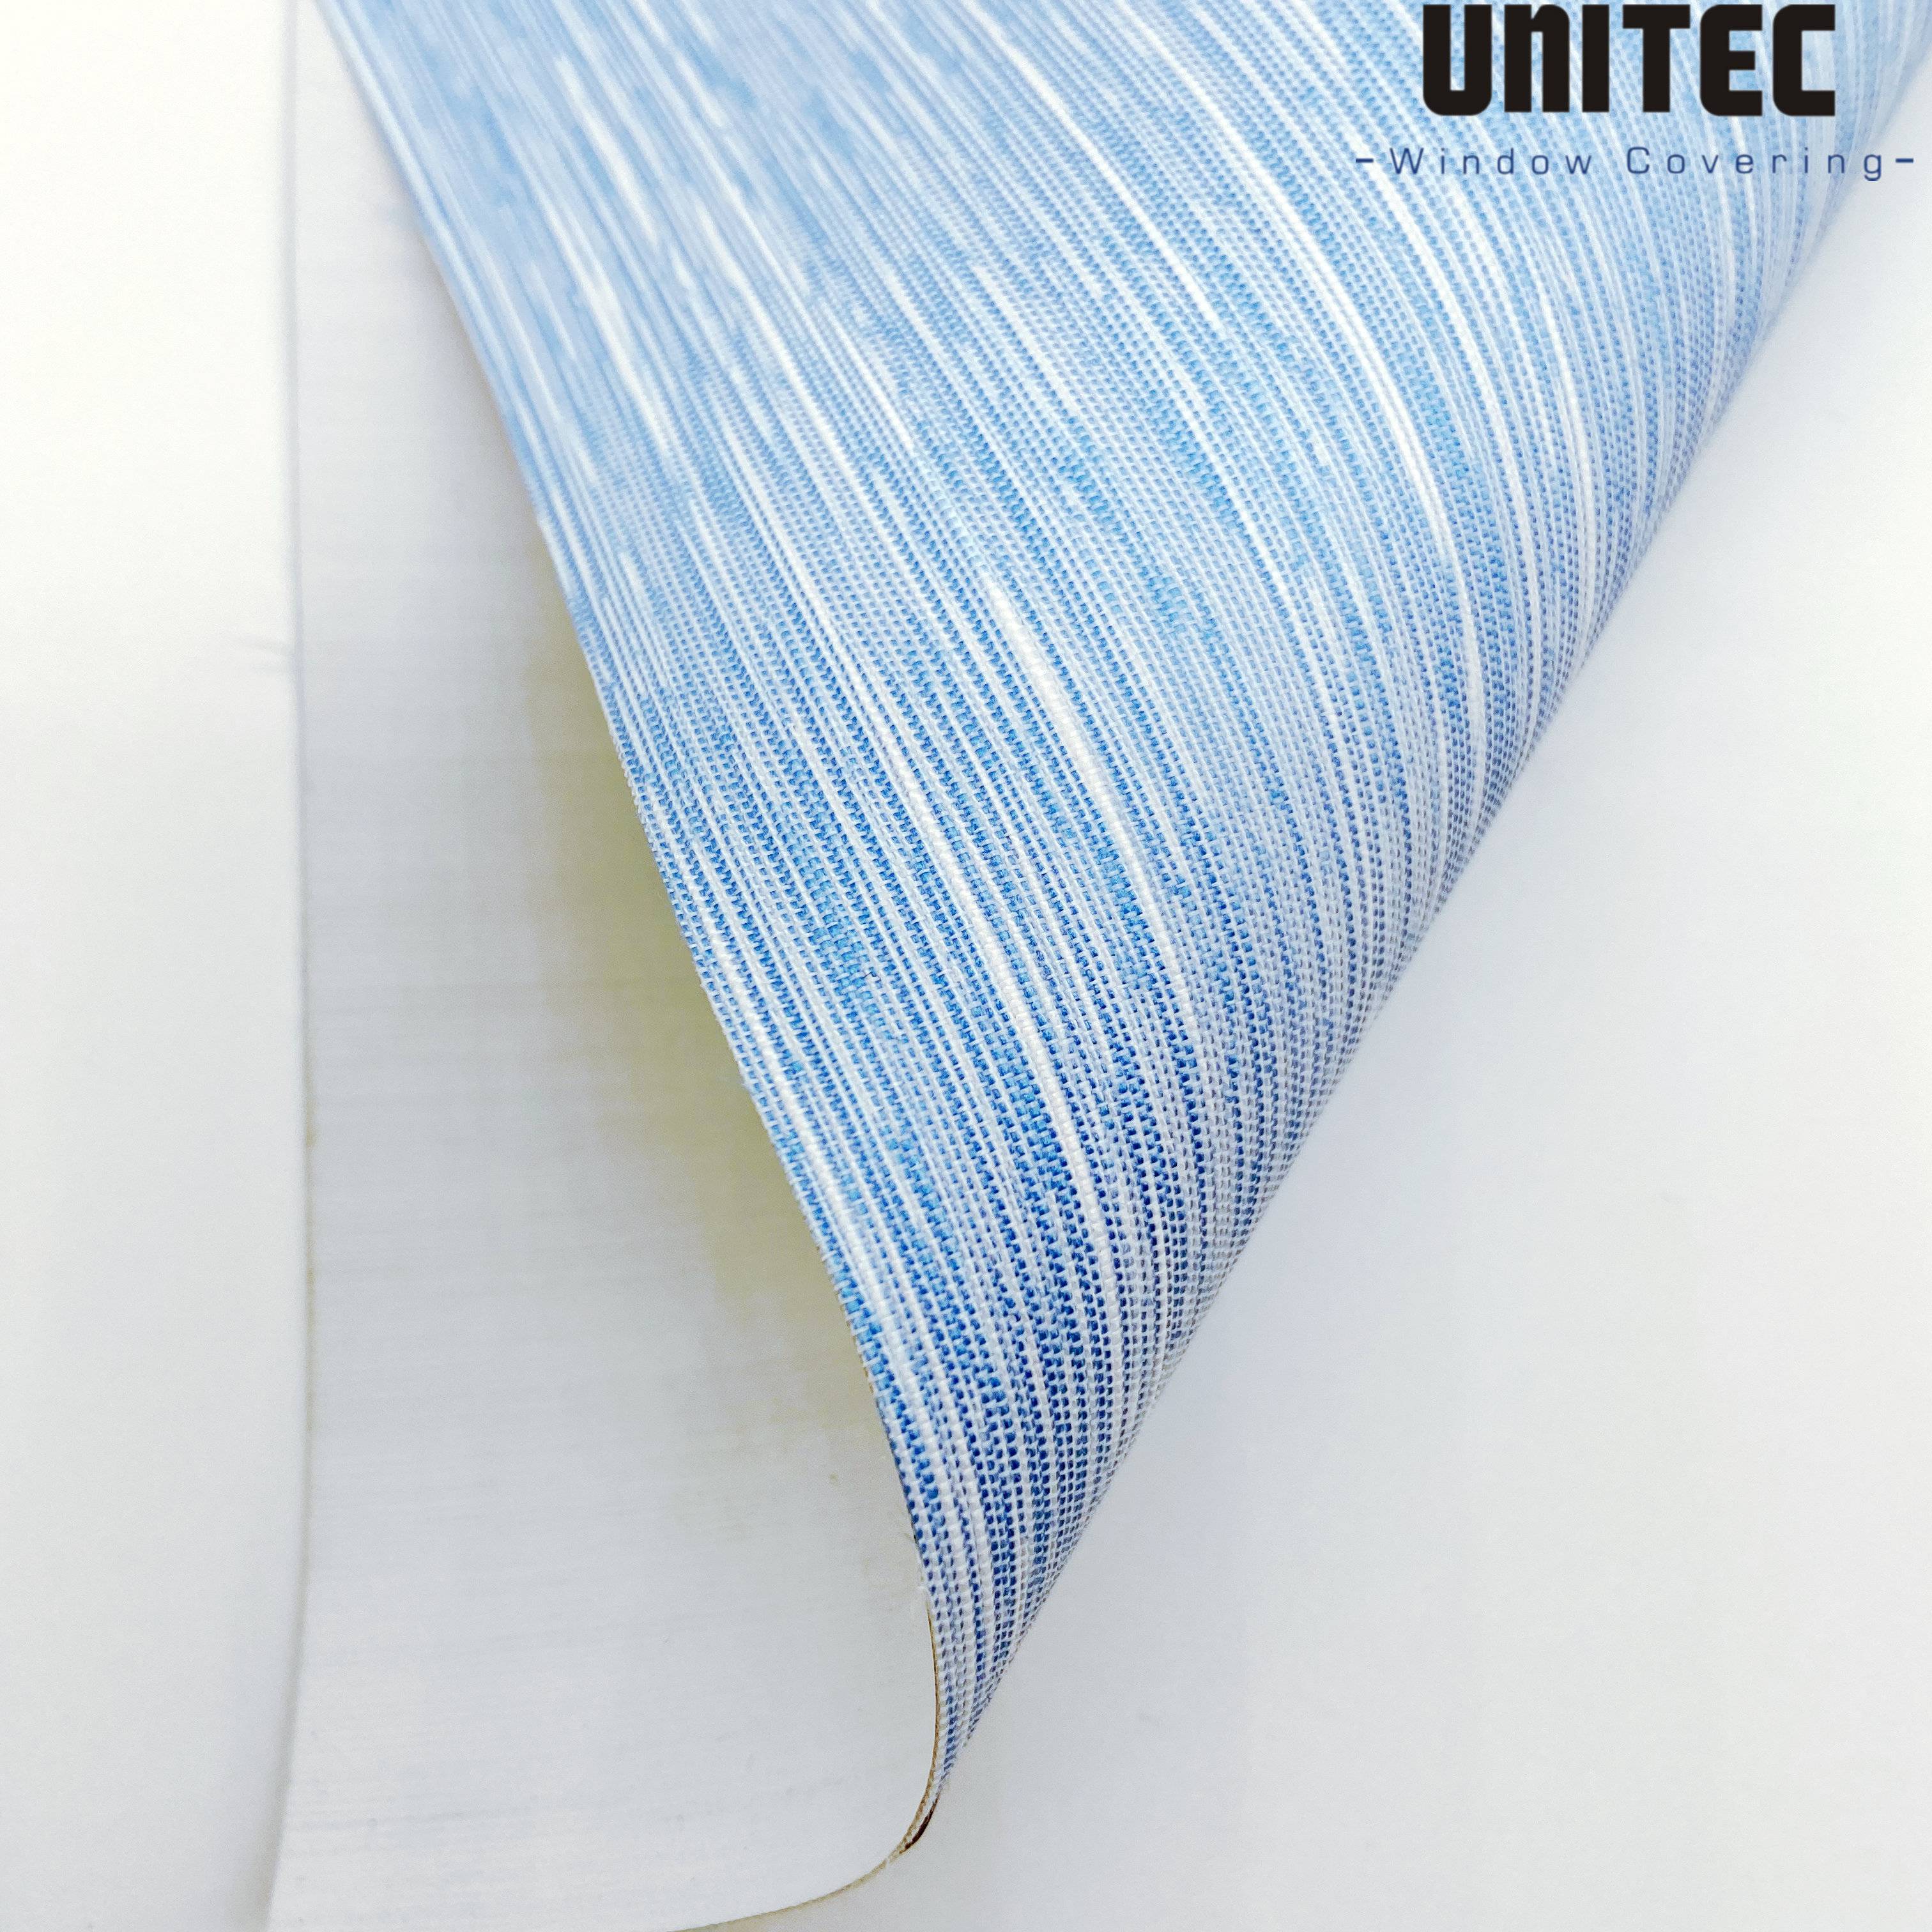 Factory making Newest Hot Sale Roller Blinds Fabric -
 Jacquard roller blinds“SLUB” – UNITEC